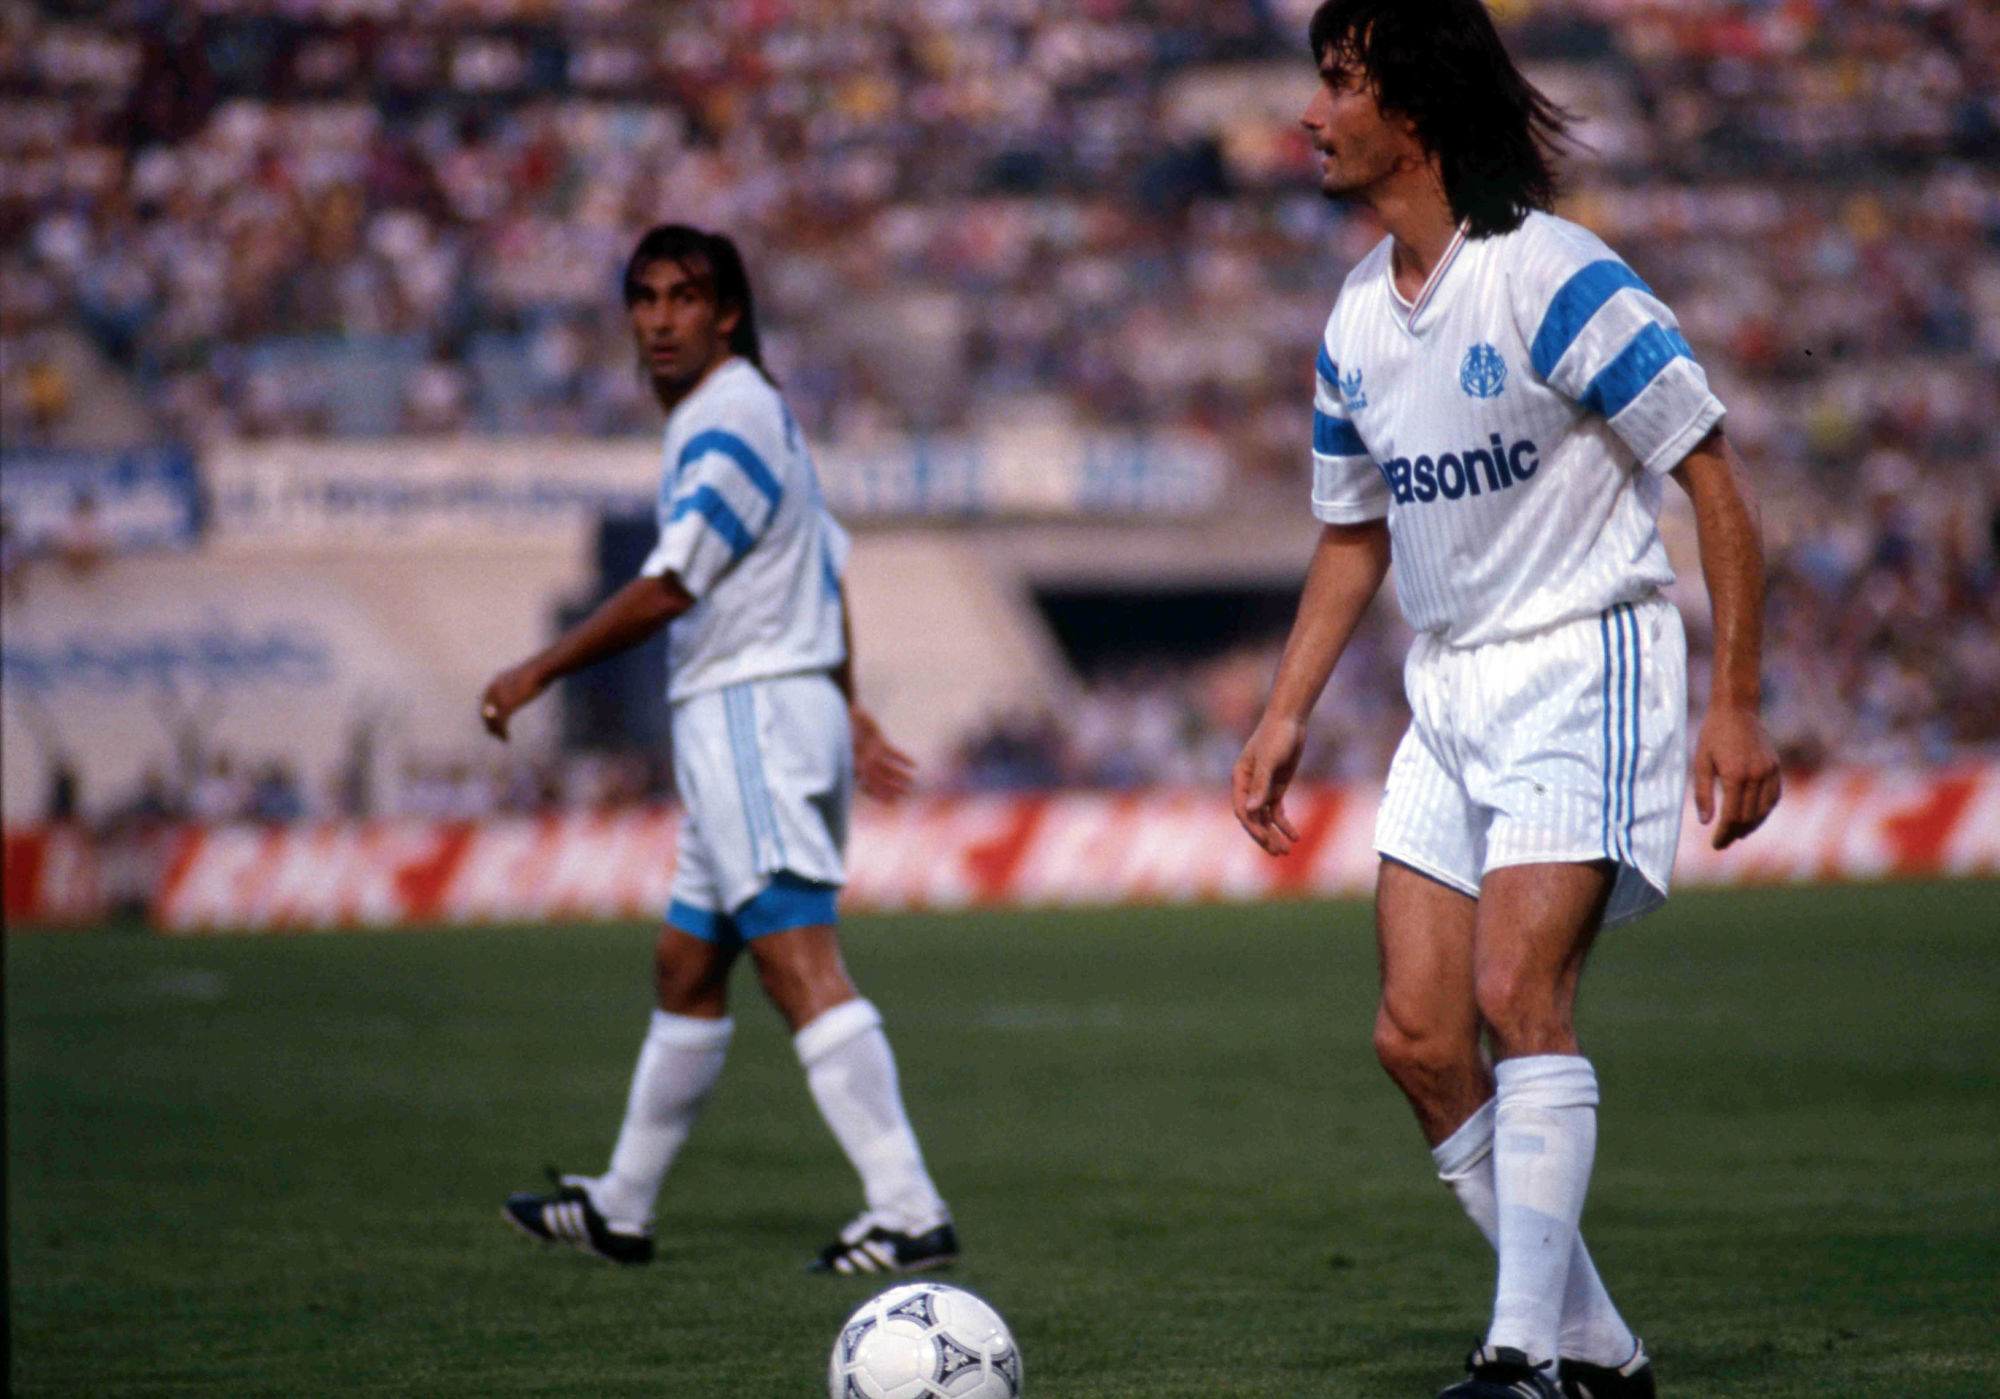 Eric di MECO - 29.07.1989 - Marseille / Nantes - Division 1 -
Photo